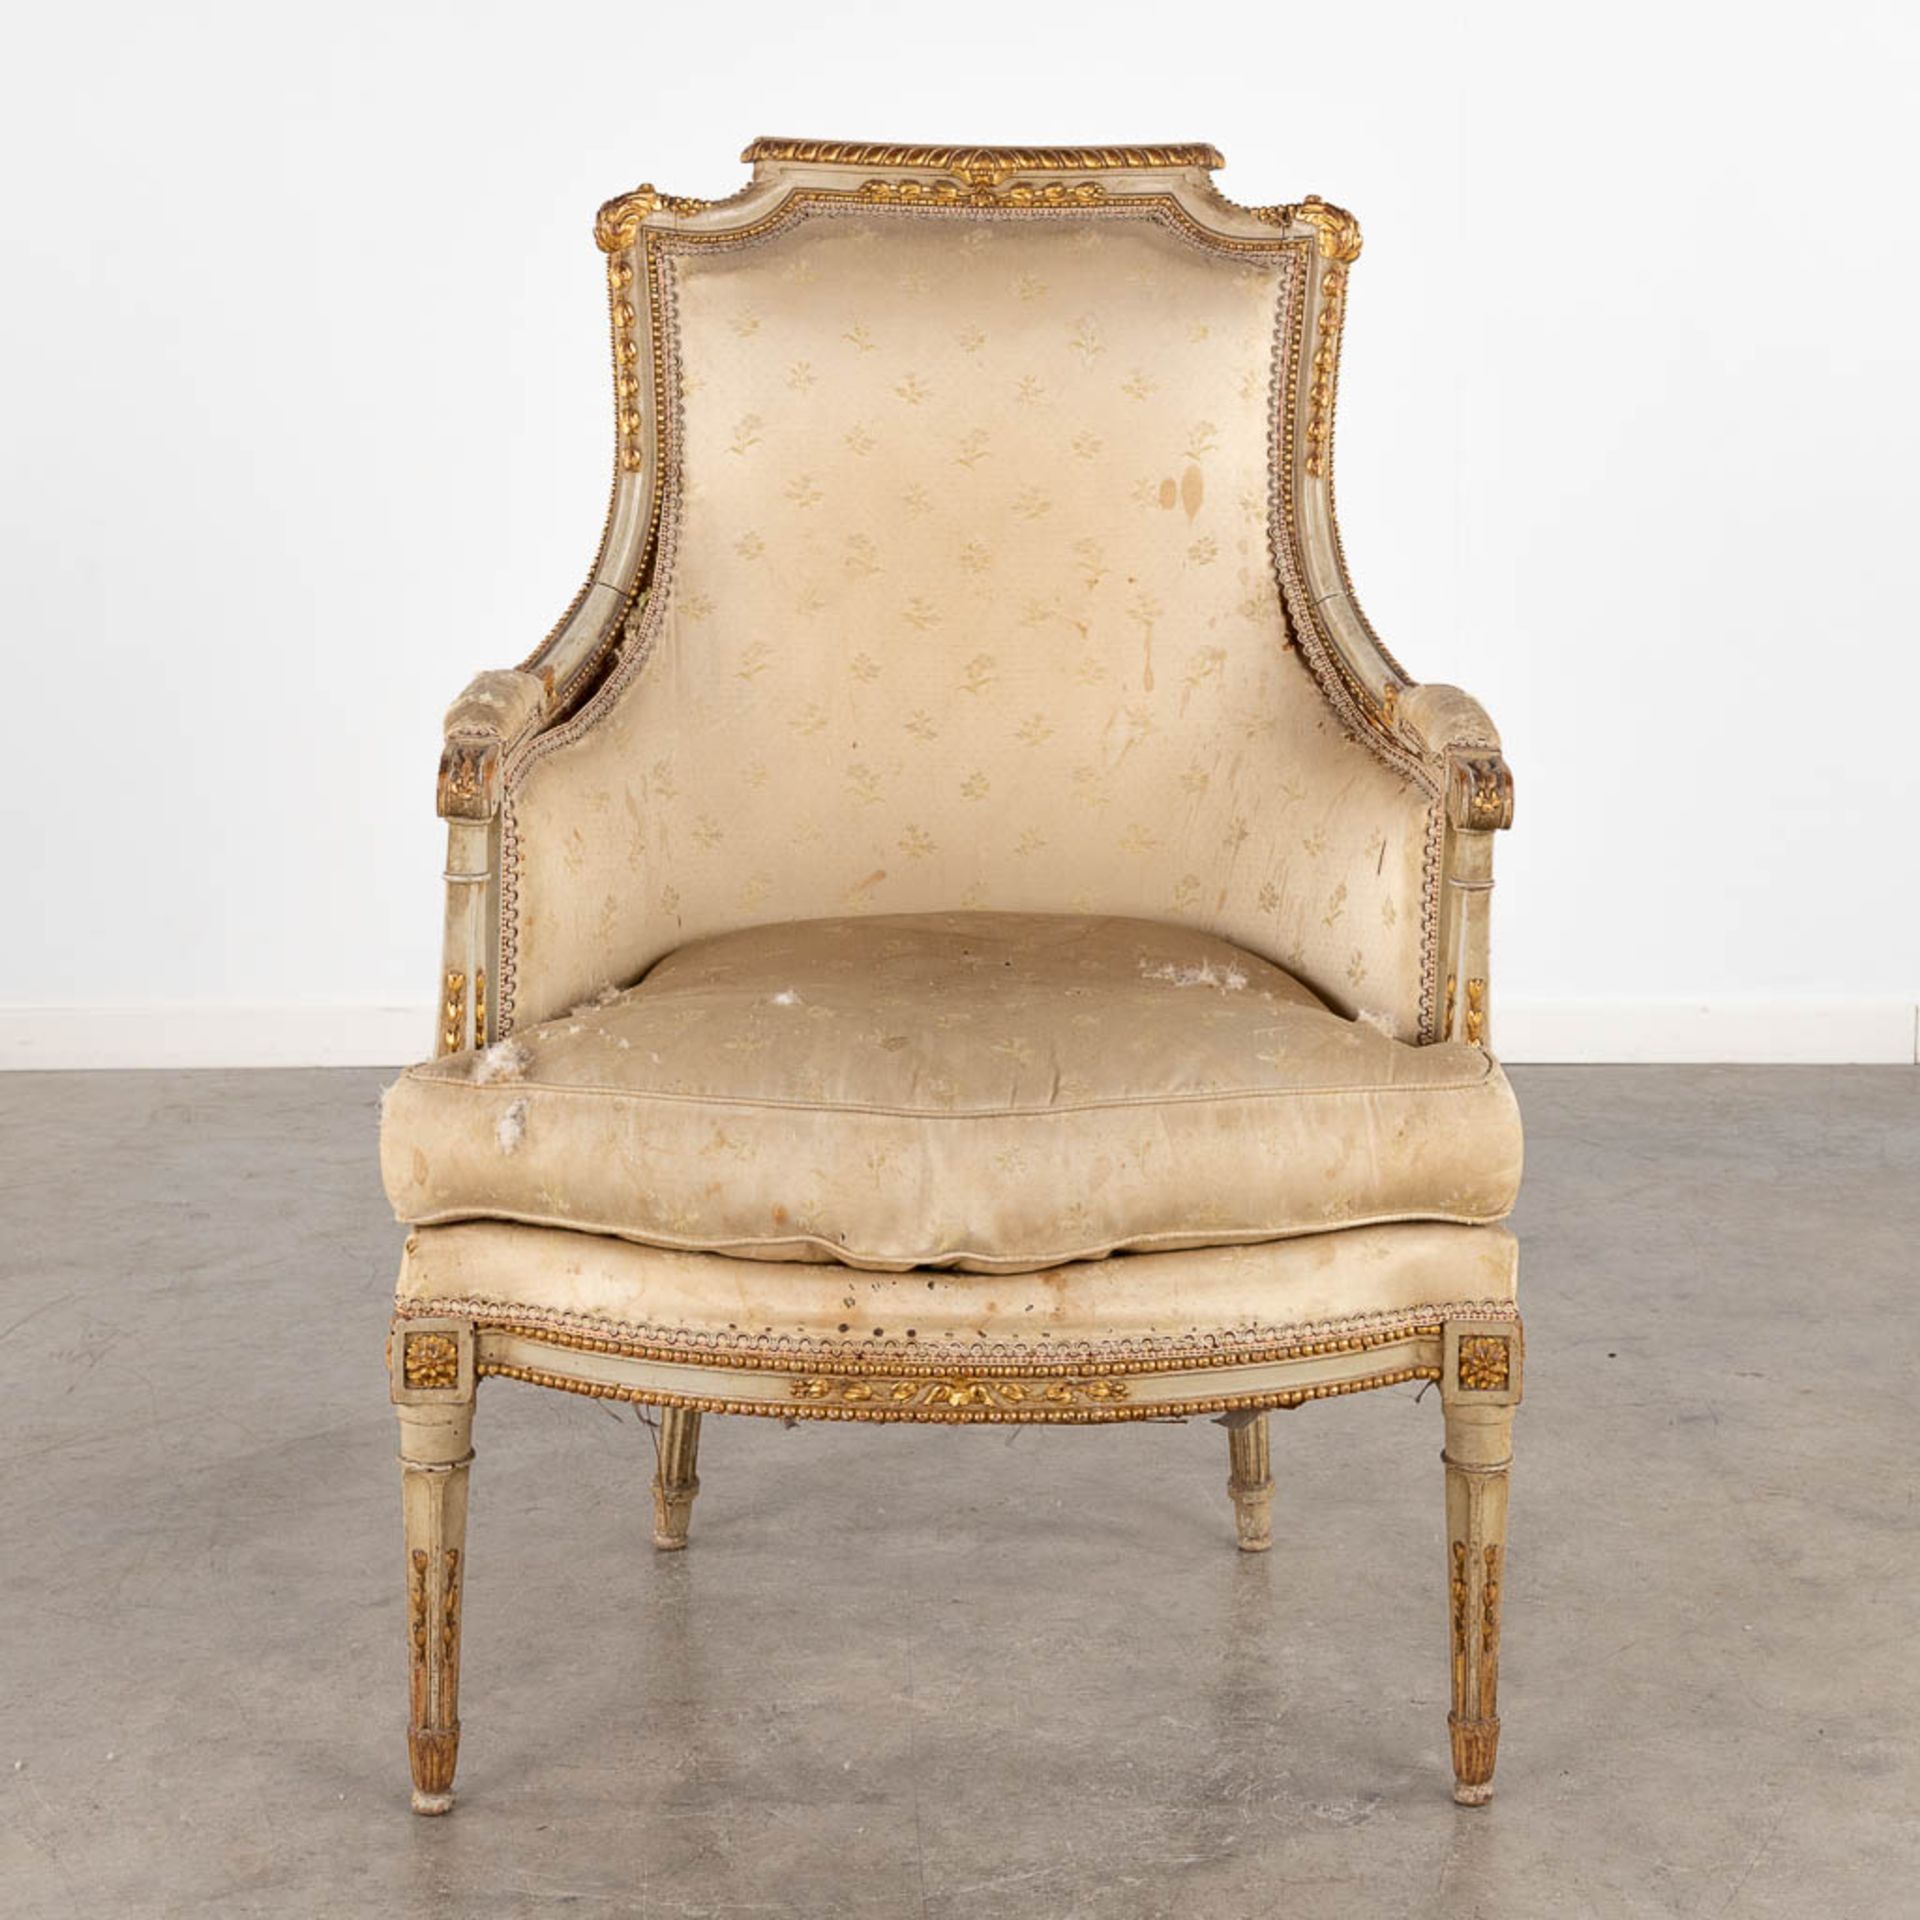 A sculptured armchair, Louis XVI style, 19th C. (D:64 x W:65 x H:100 cm) - Image 4 of 16